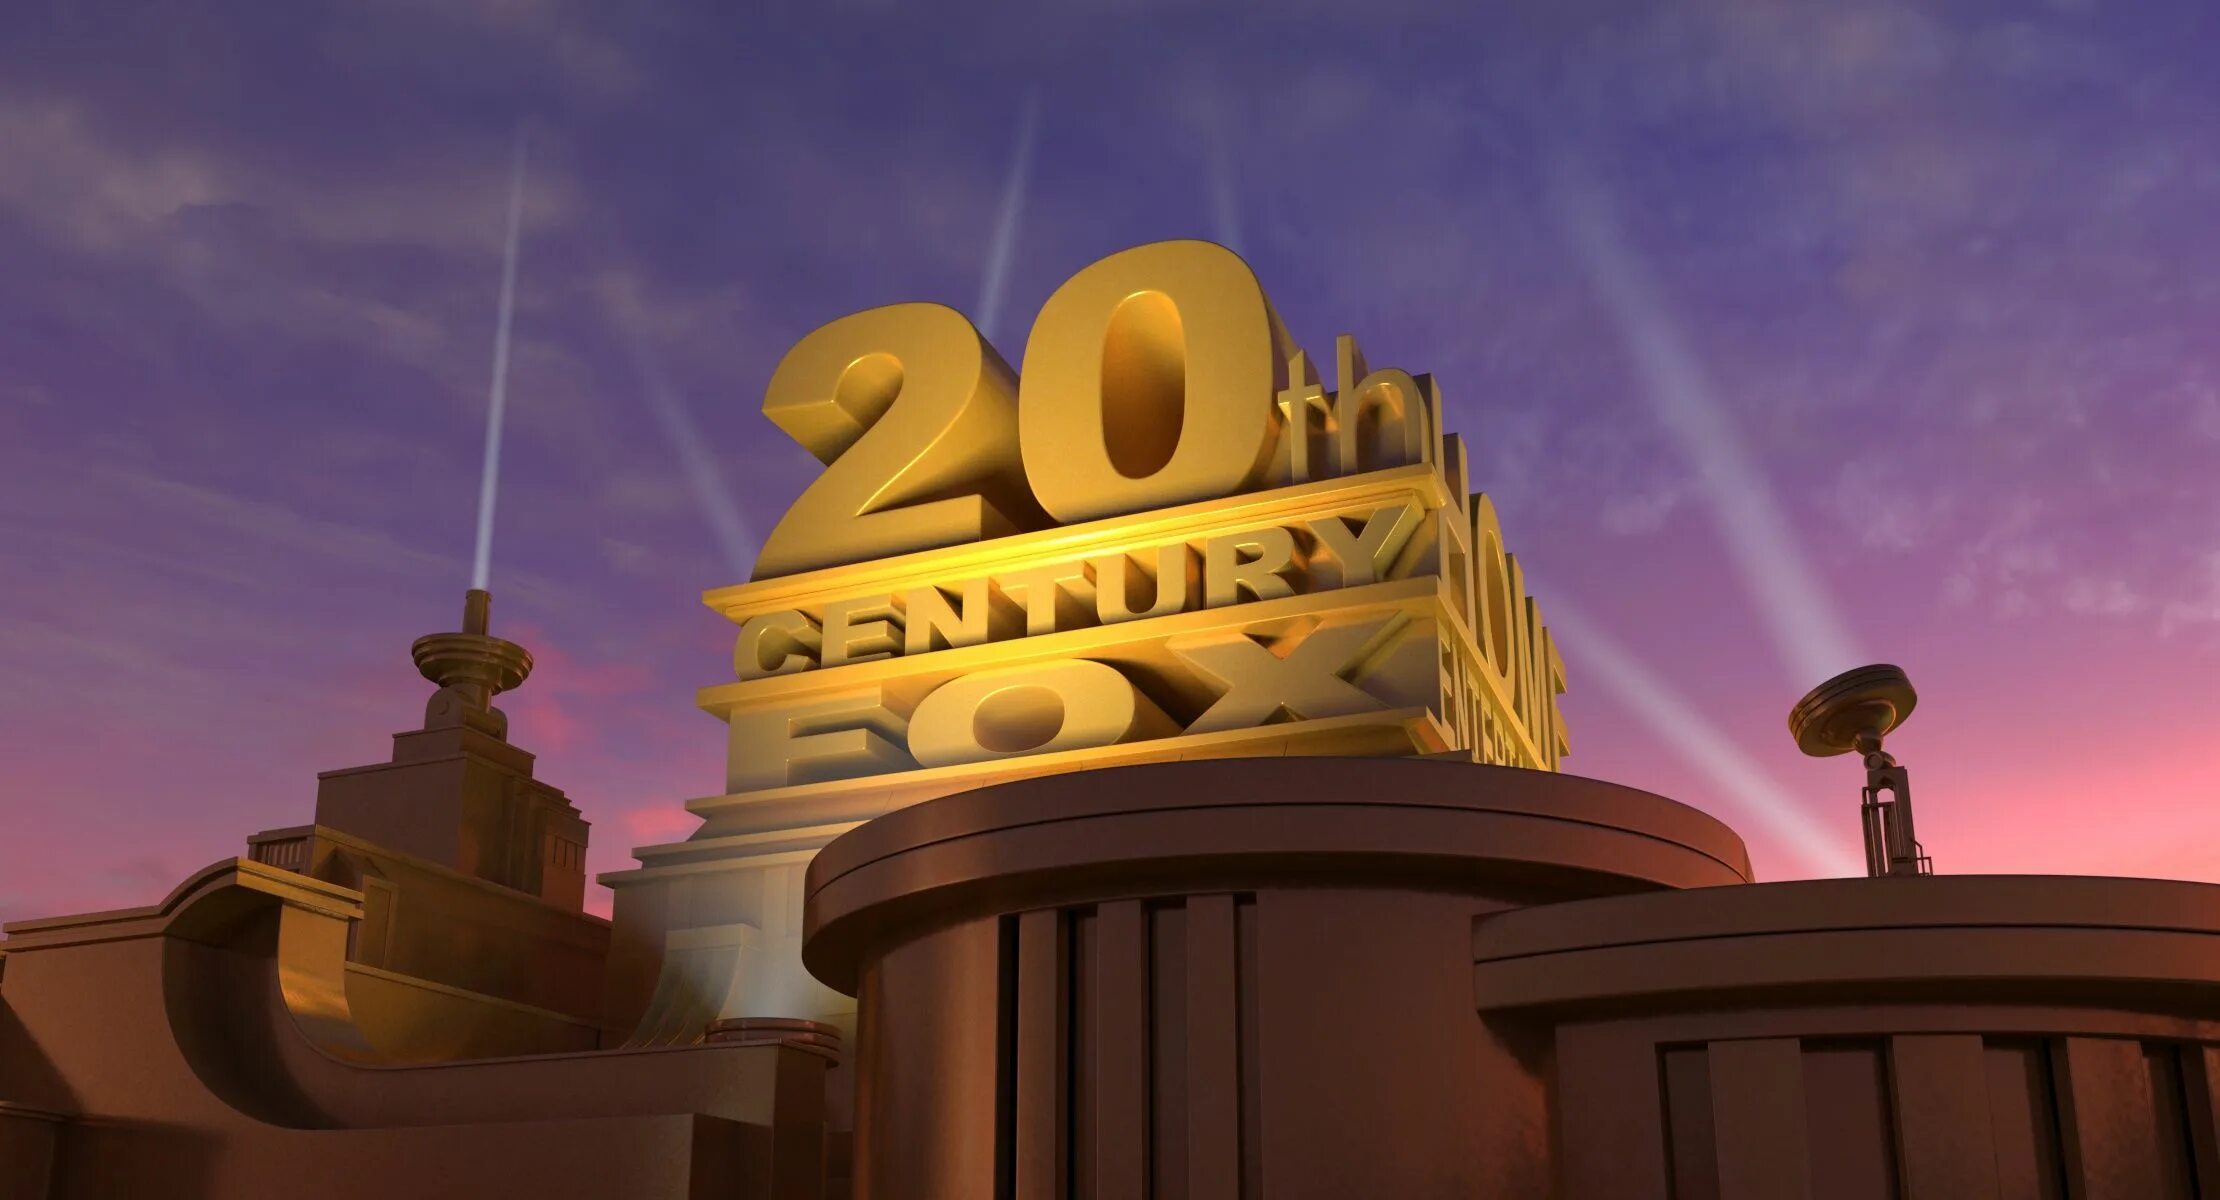 20th fox 3d. 20th Century Fox СТС. 20 Век Фокс хоум Энтертейнмент. 20th Century Fox 1993. 20th Century Fox Sketchfab.